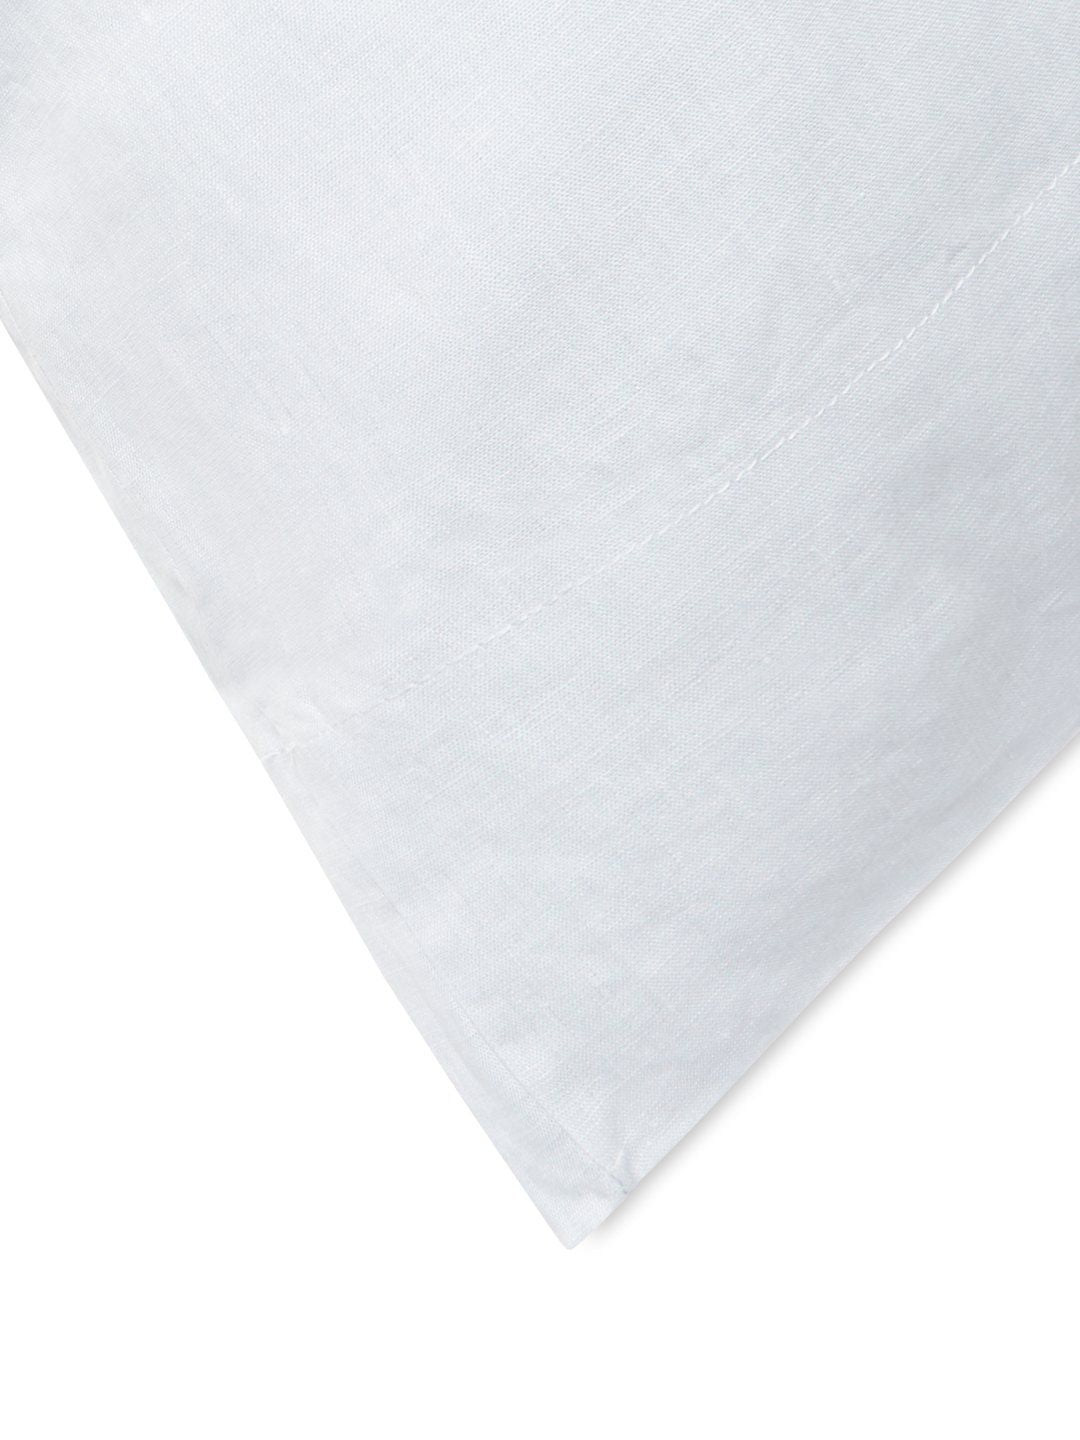 100% Linen Plain Hem Pillowcase Pairs